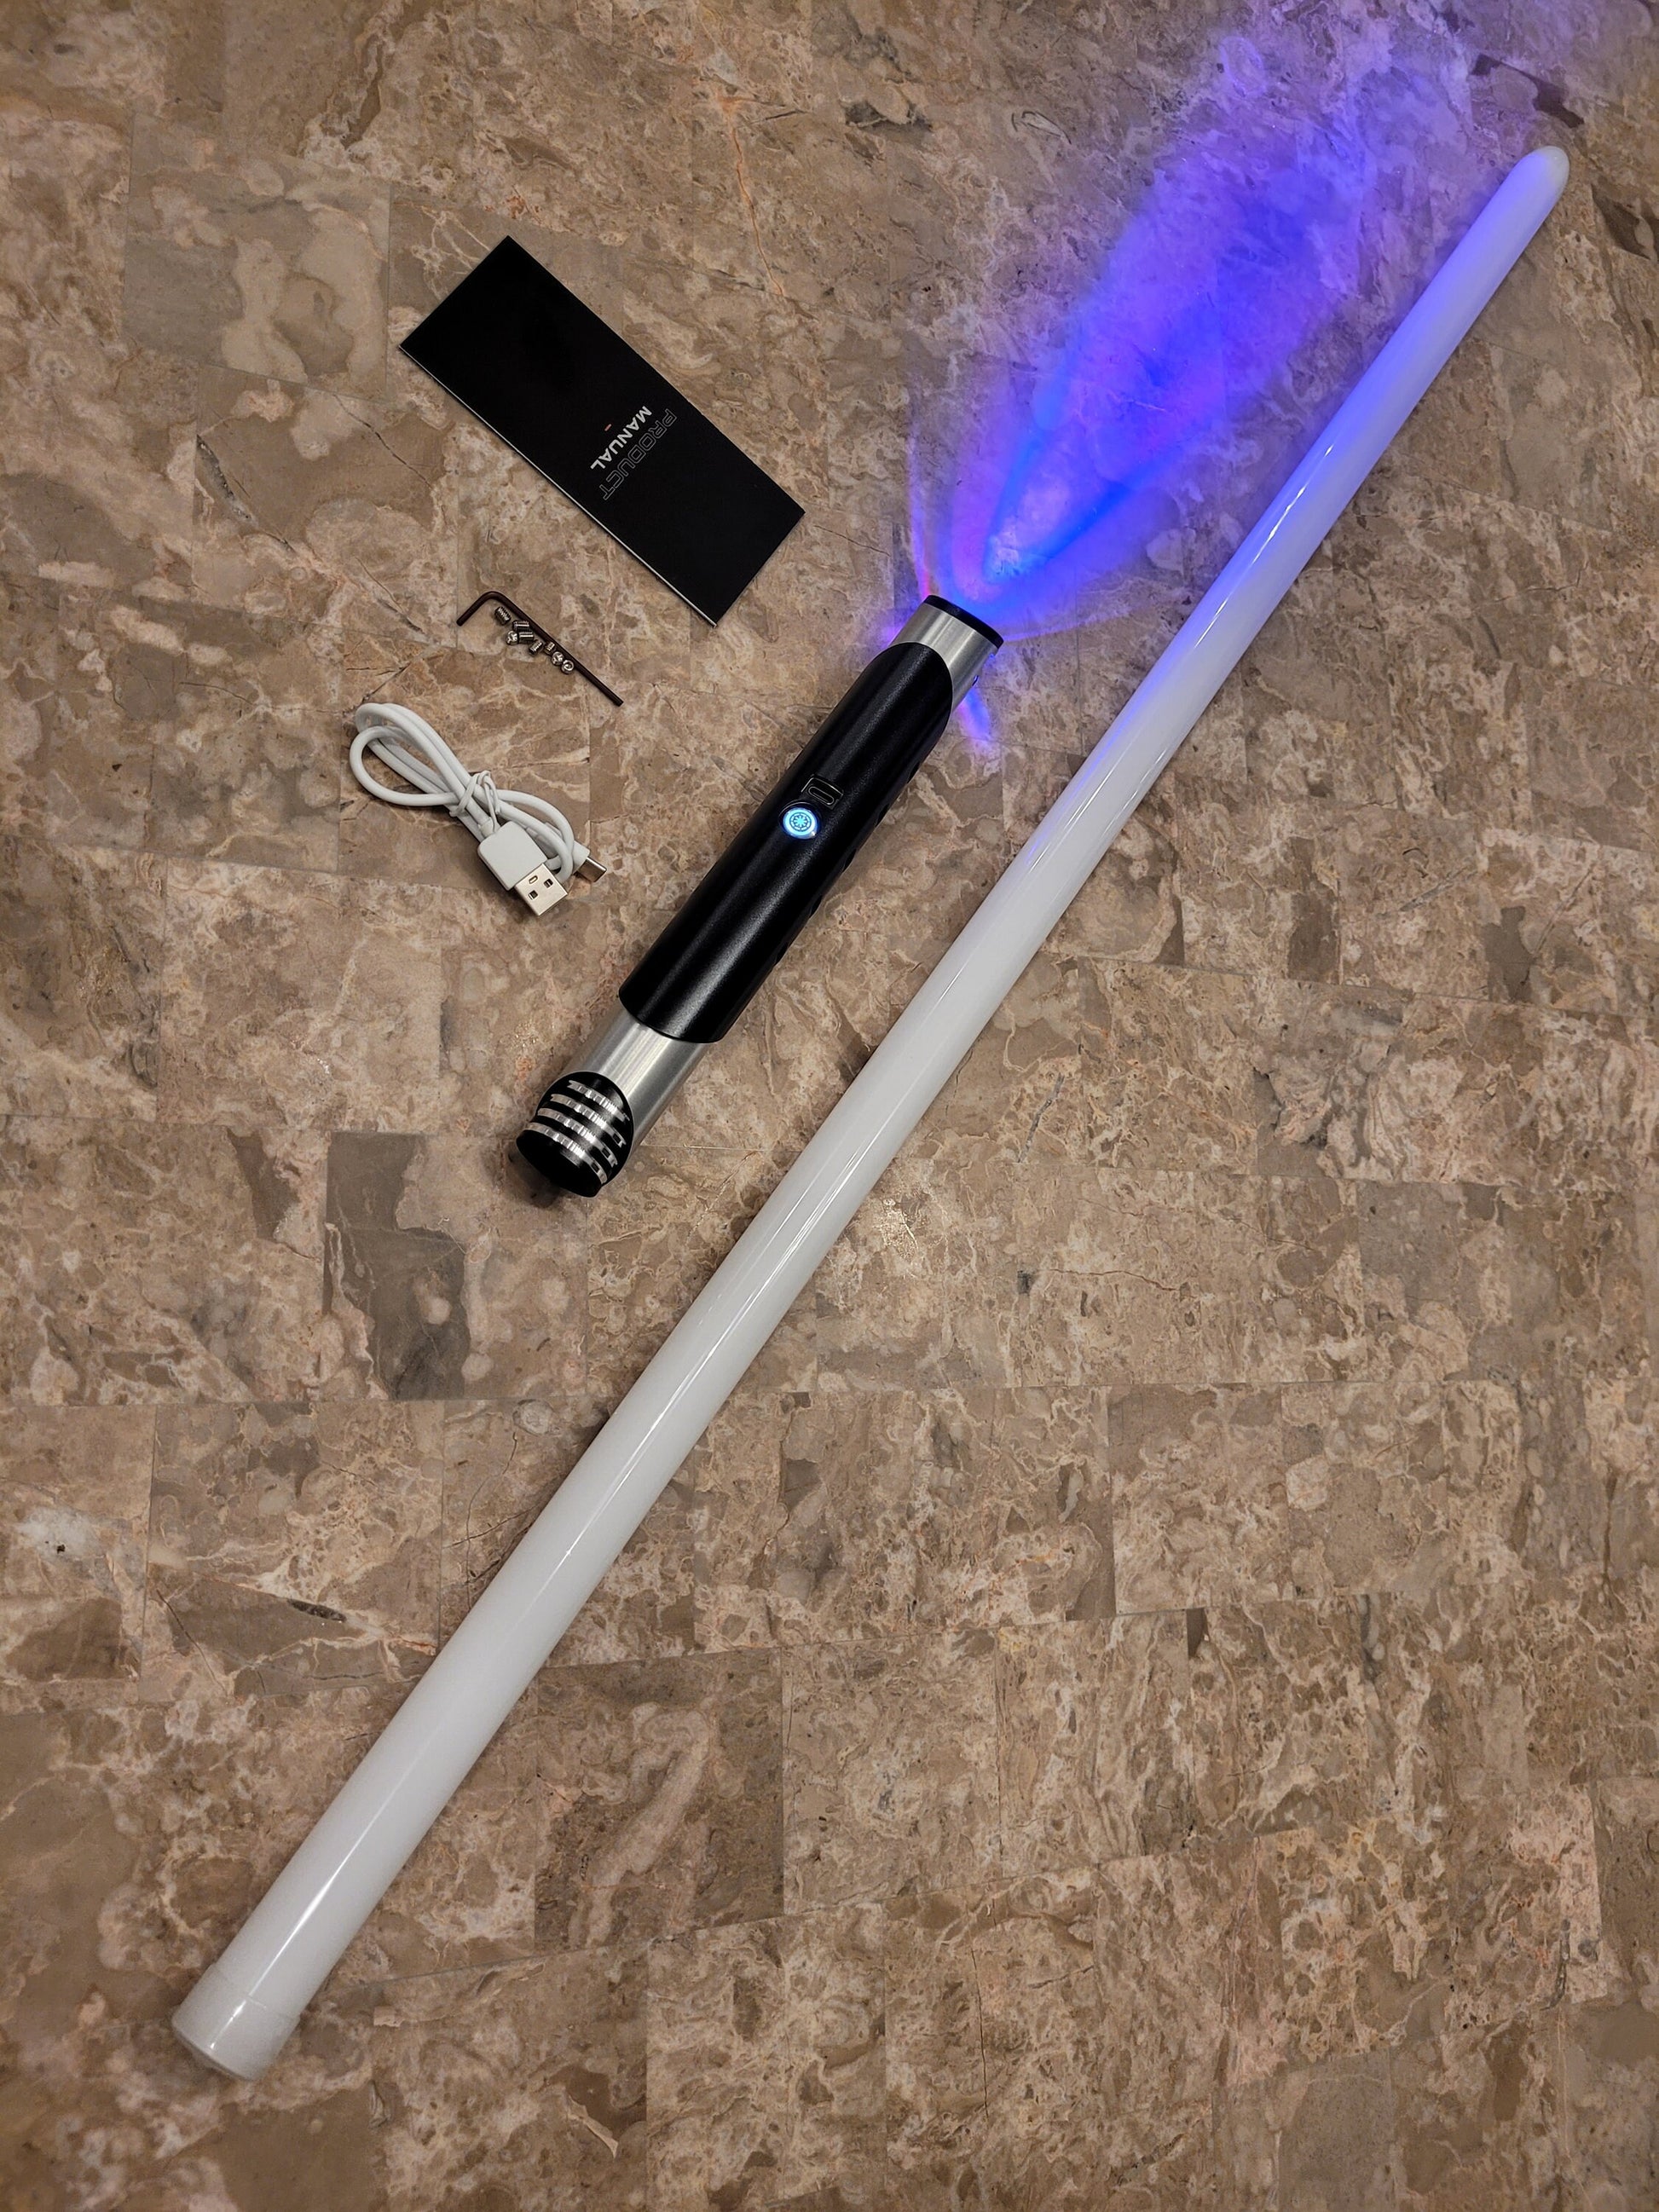 Color Changing Lightsaber with Sound – "Elite Saber" Extremely Durable, Aluminum Hilt, Rounded Shaped Emitter, RGB, Star Wars Bossaber